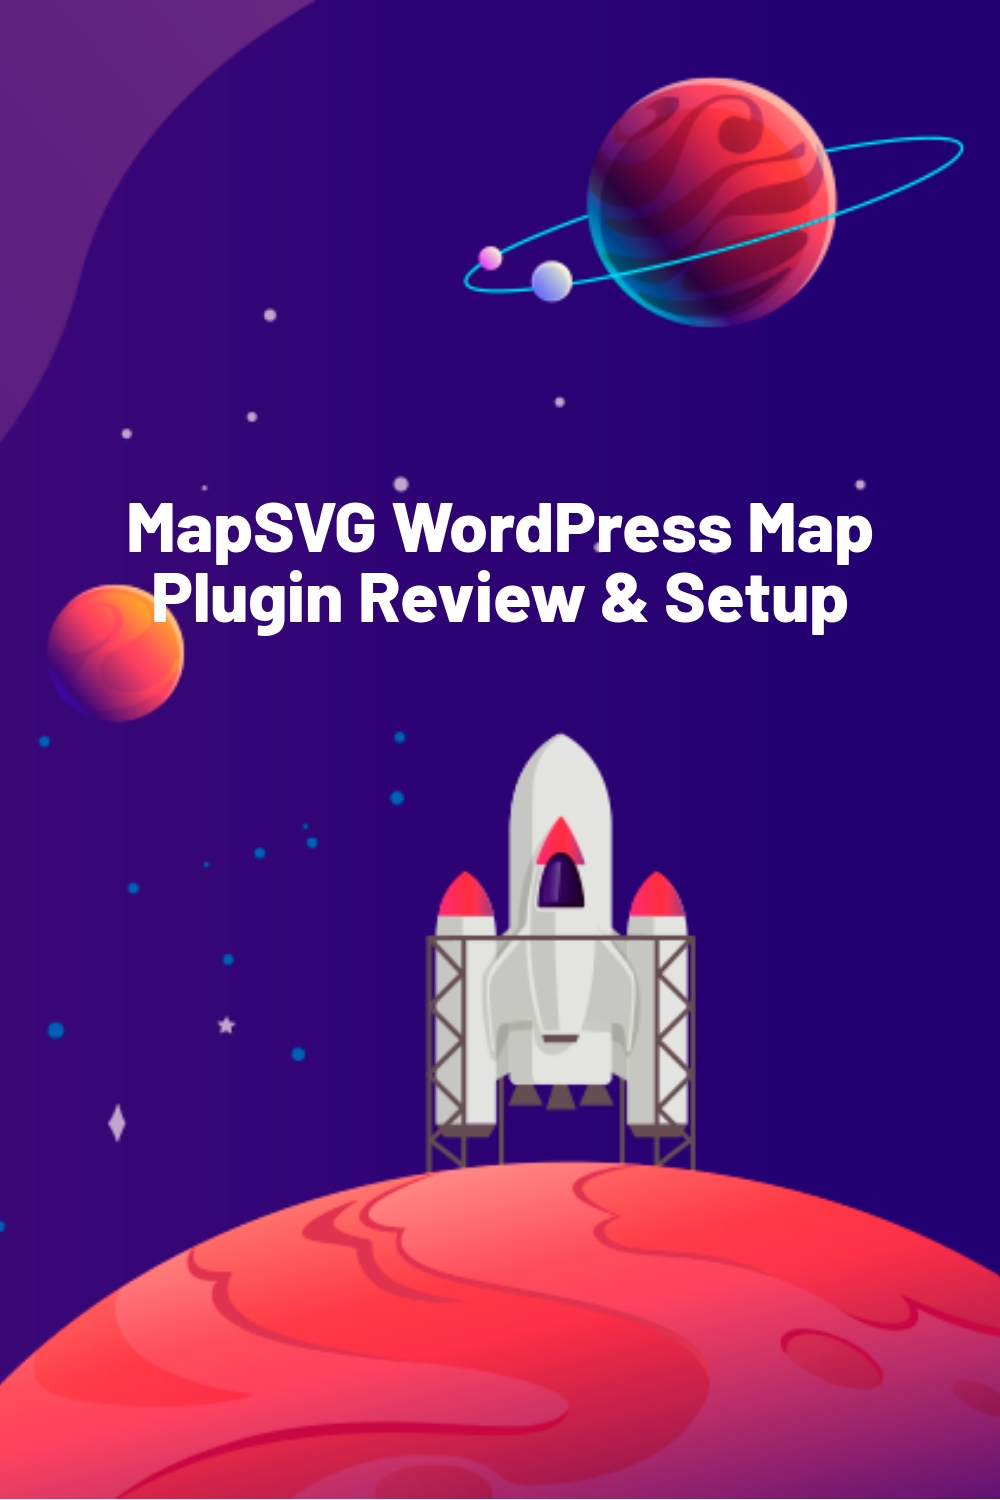 MapSVG WordPress Map Plugin Review & Setup